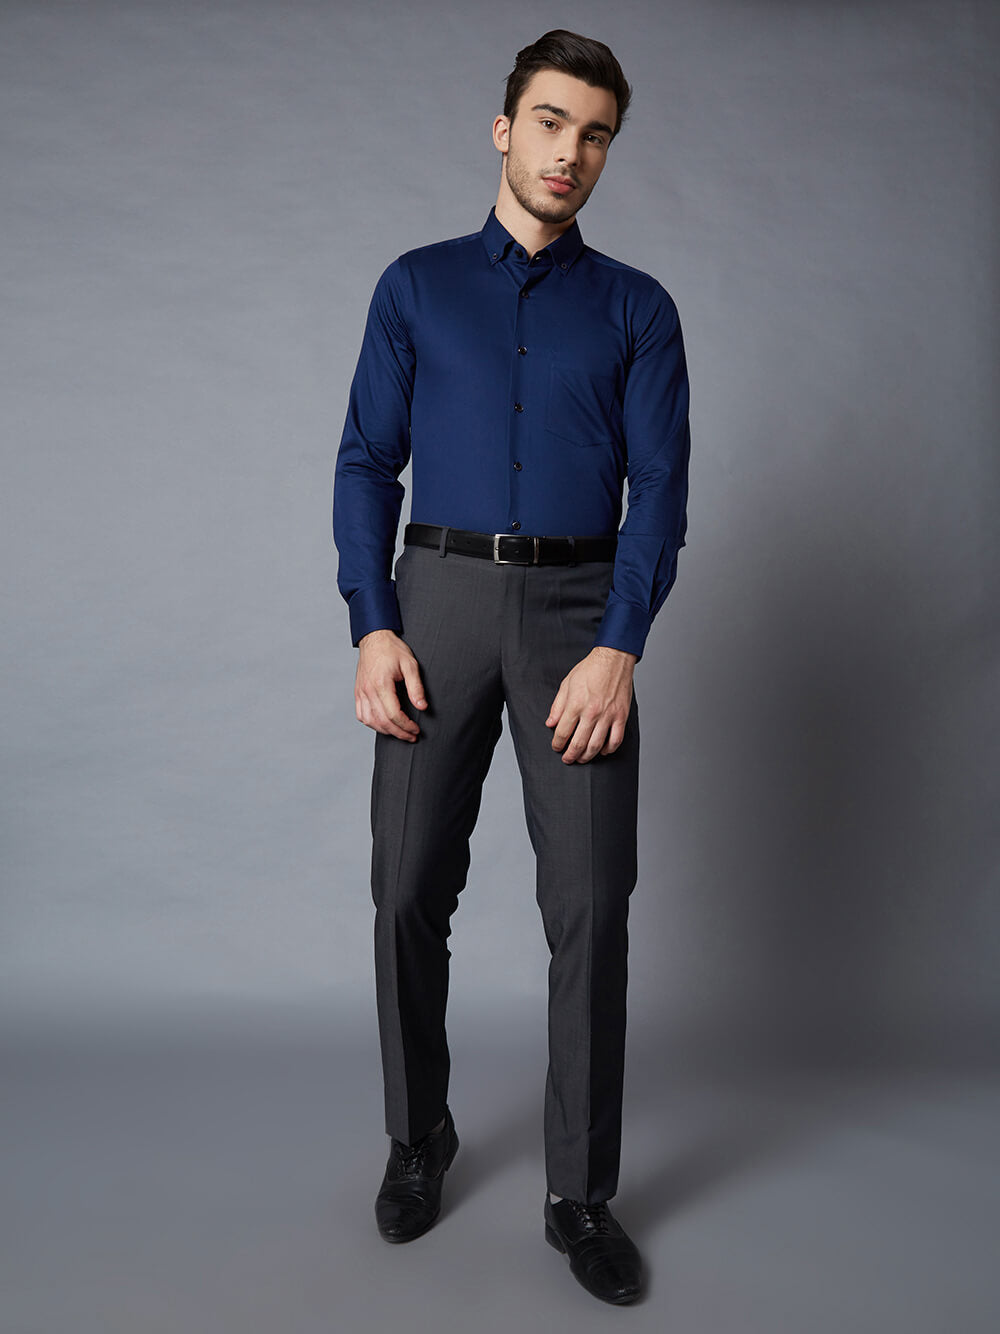 Blue Dress Shirt Outfits & Color Combinations for Men